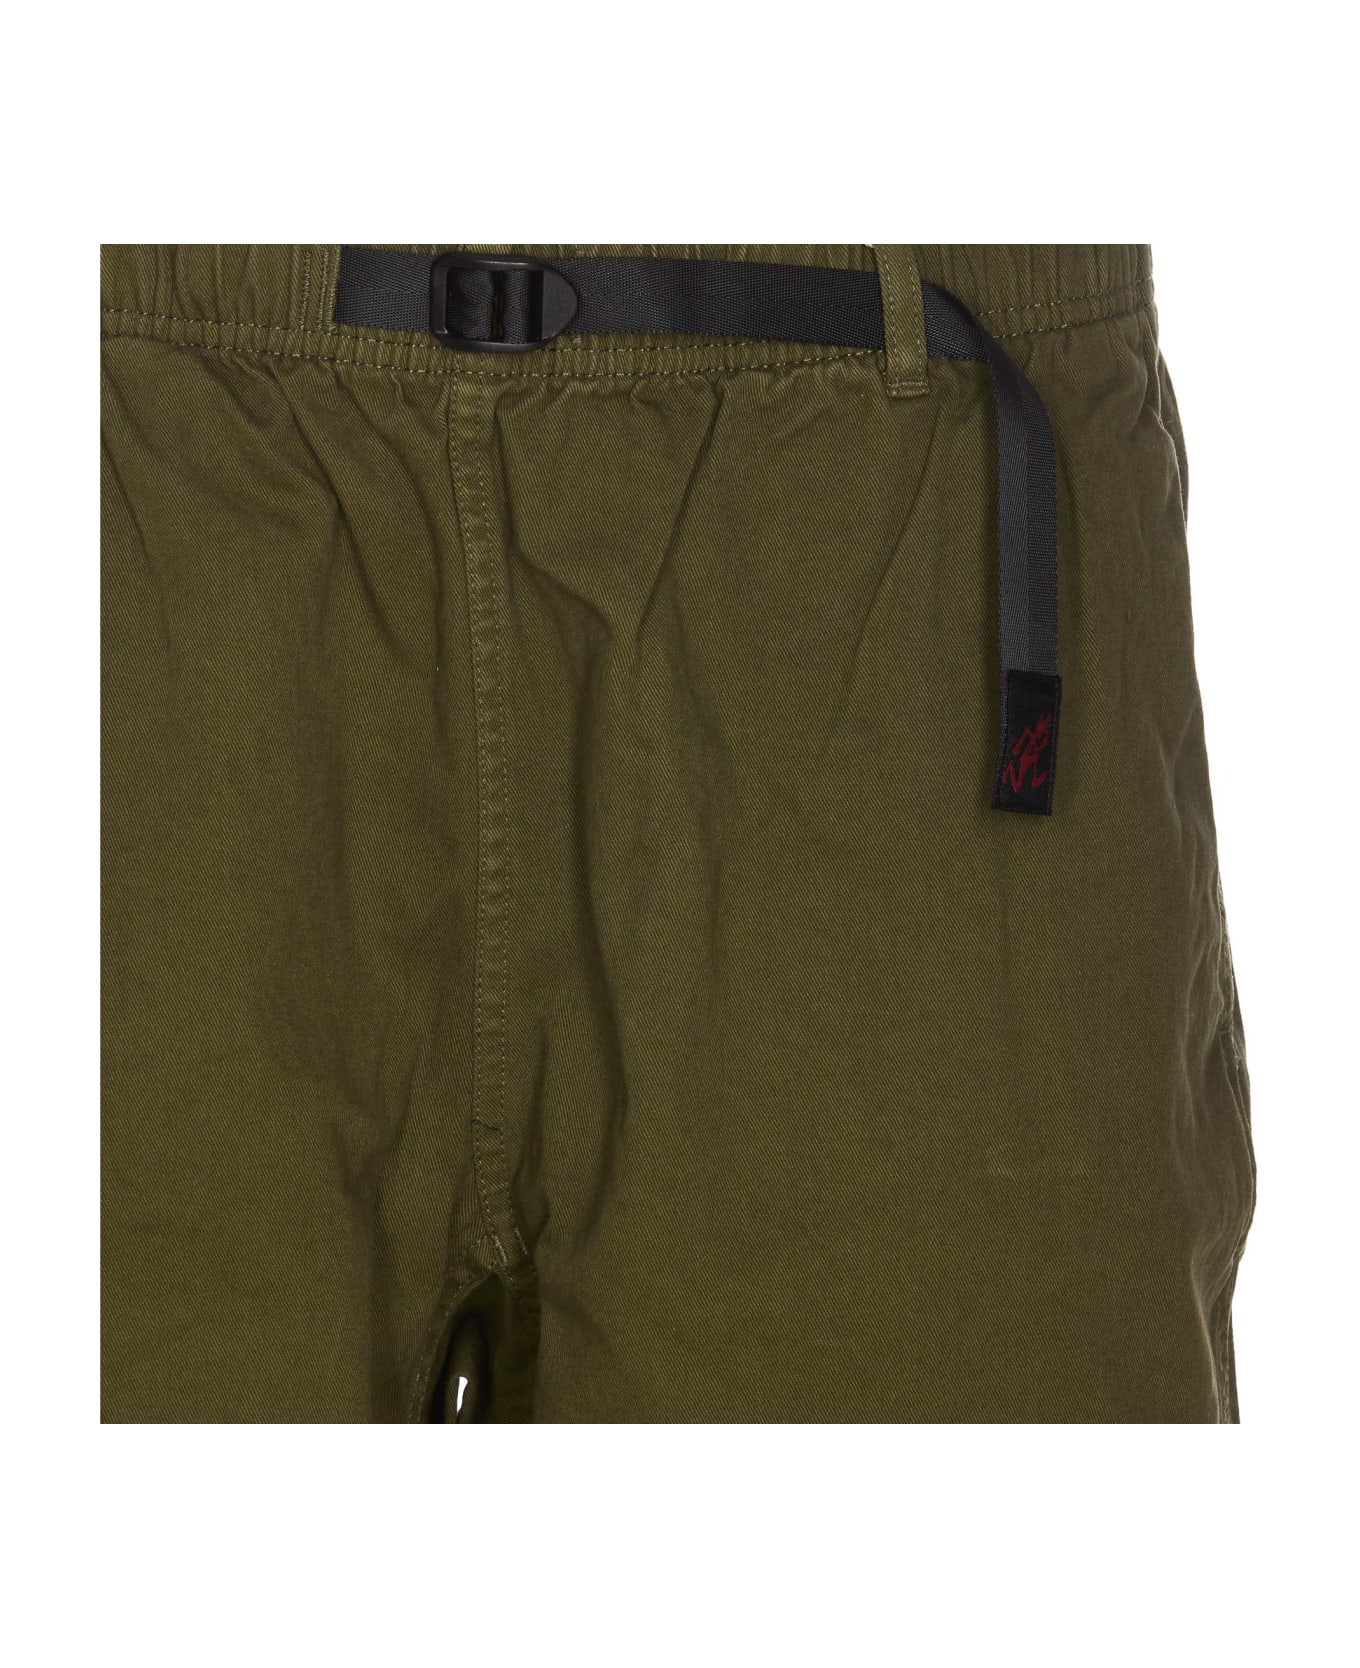 Gramicci Shorts - Green